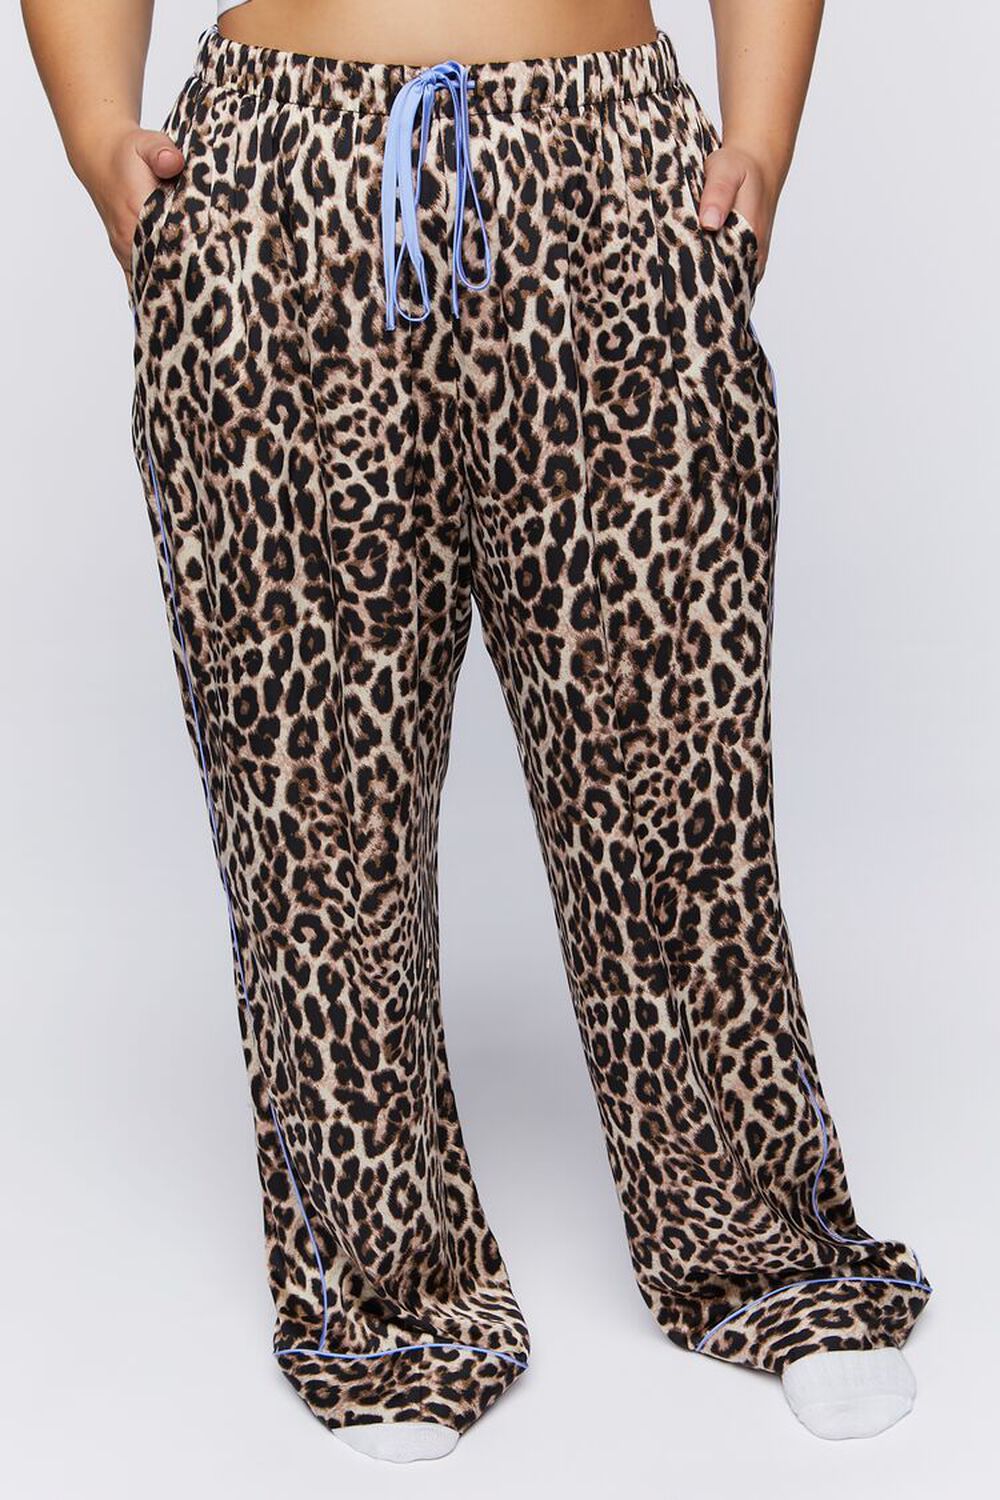 TAN/MULTI Plus Size Satin Leopard Pajama Pants, image 2